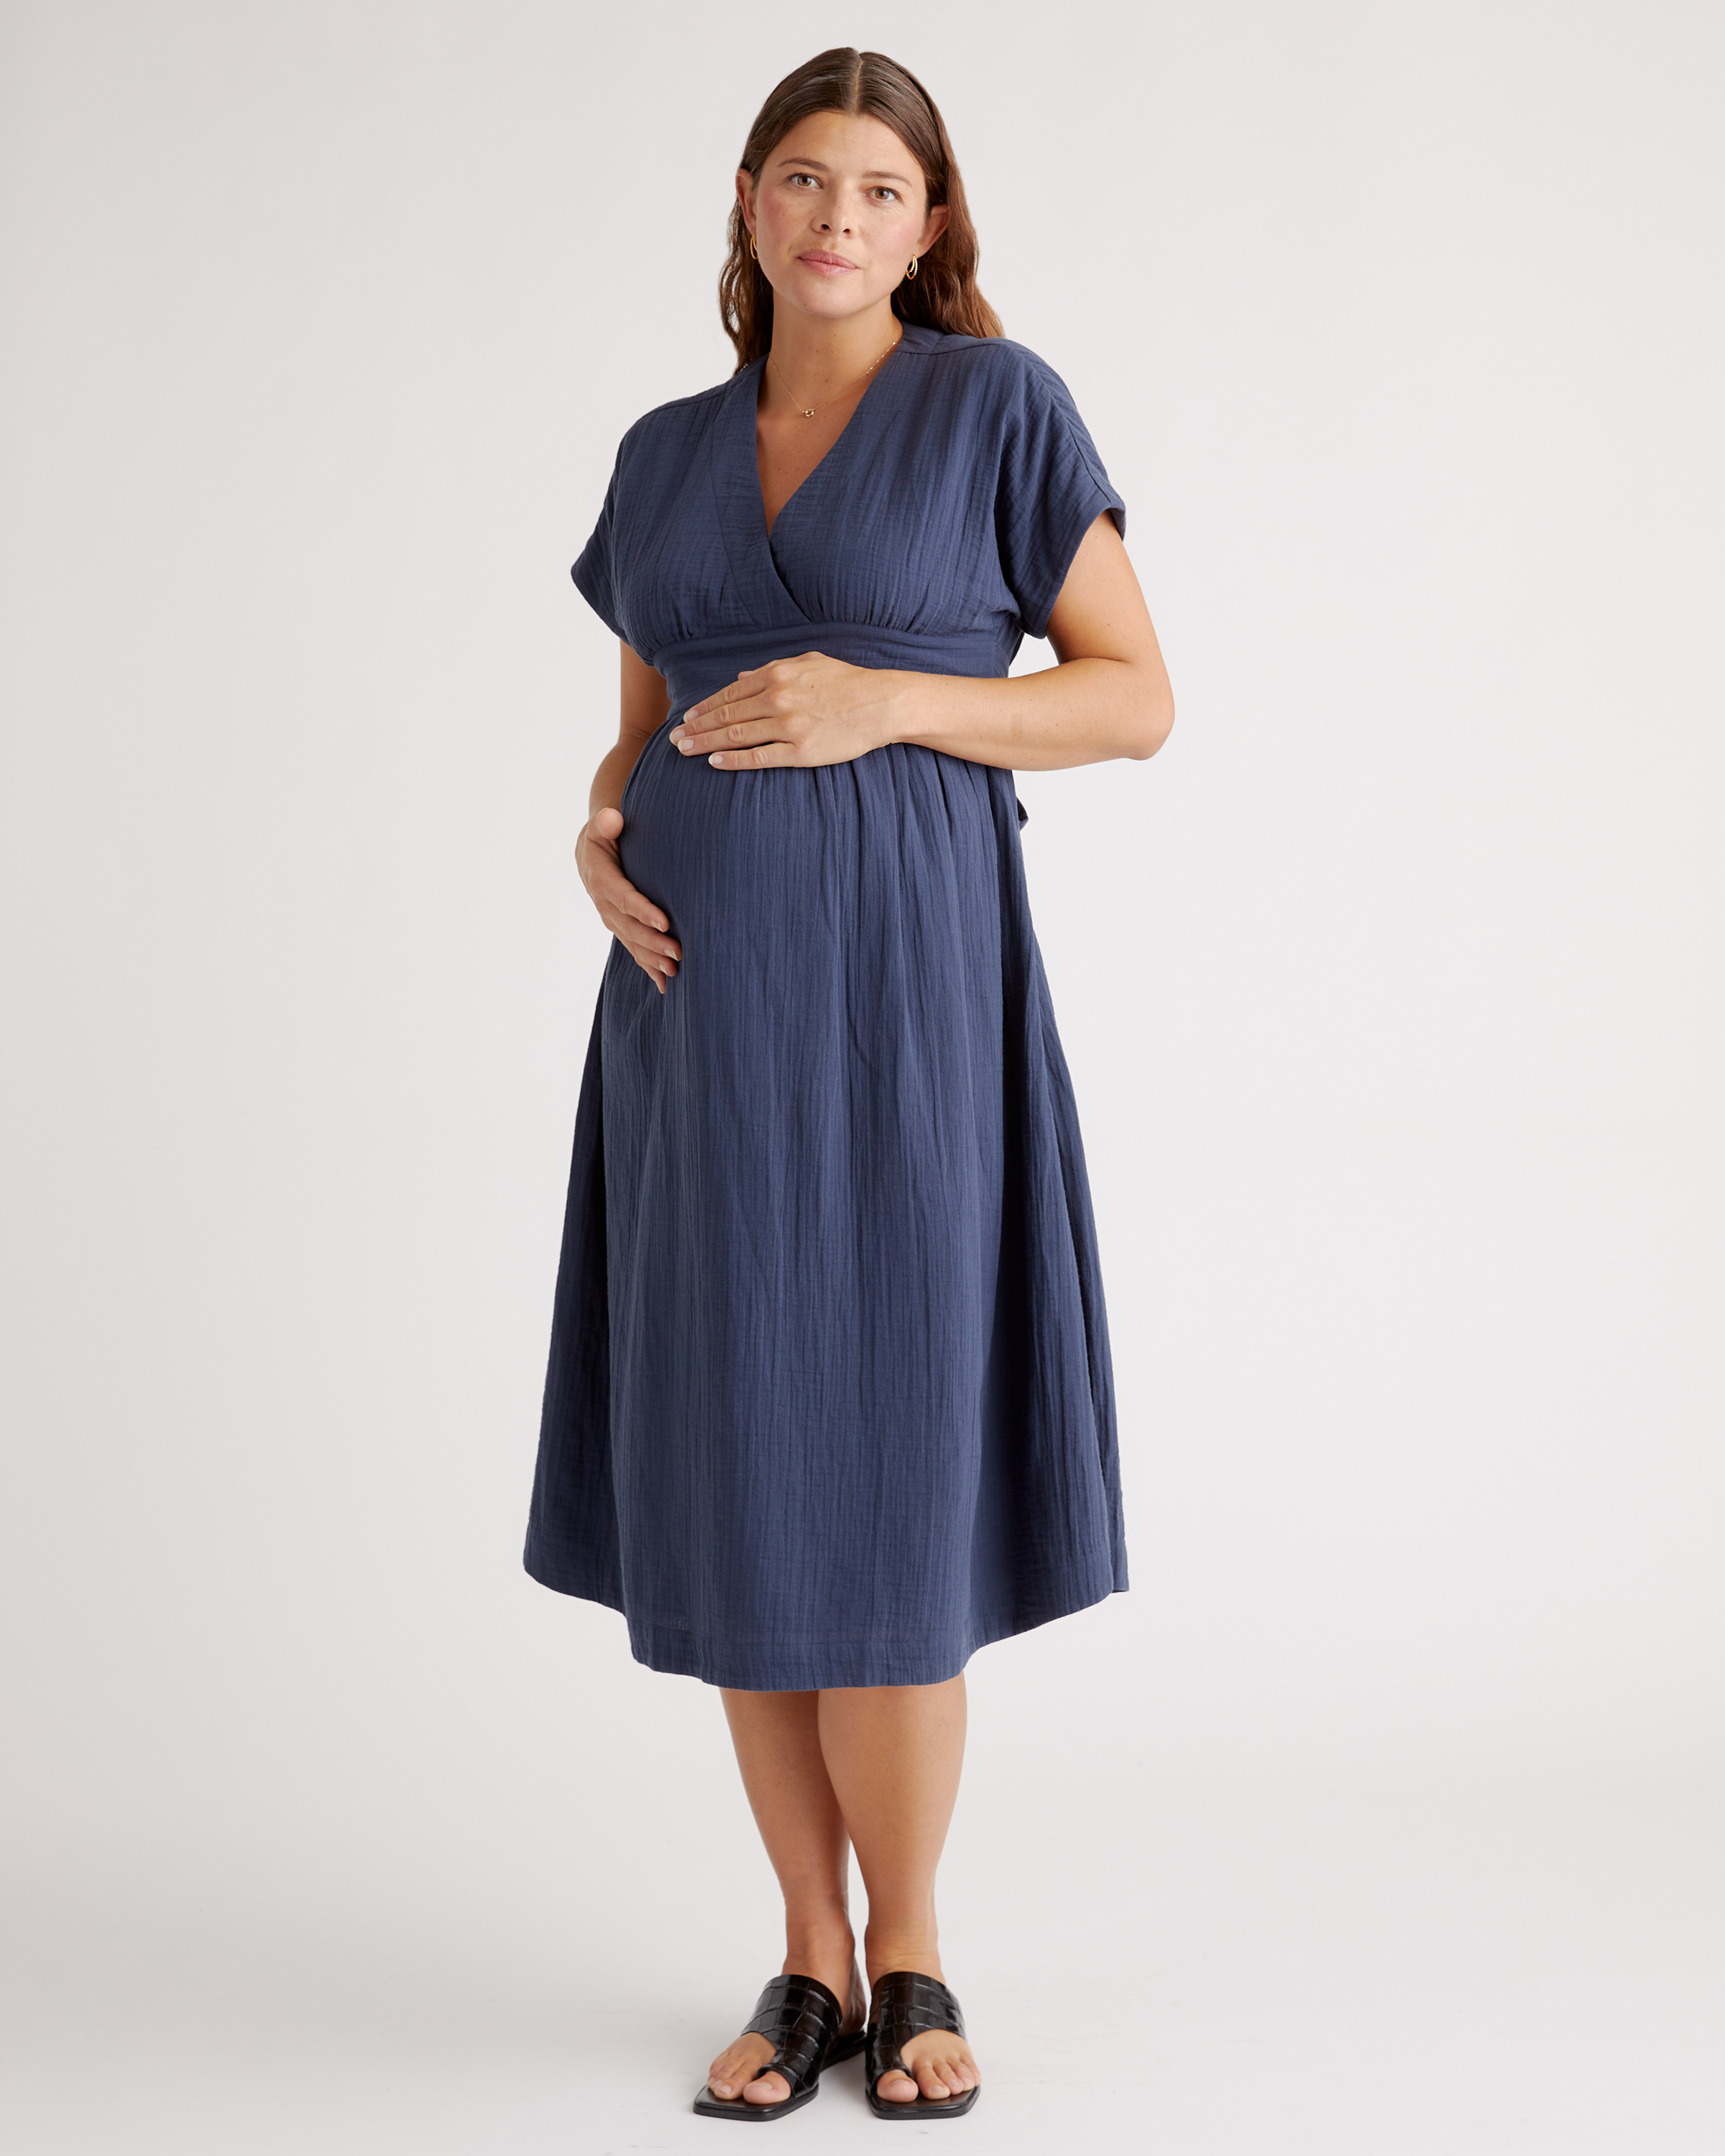  Wrap Style Maternity Dress